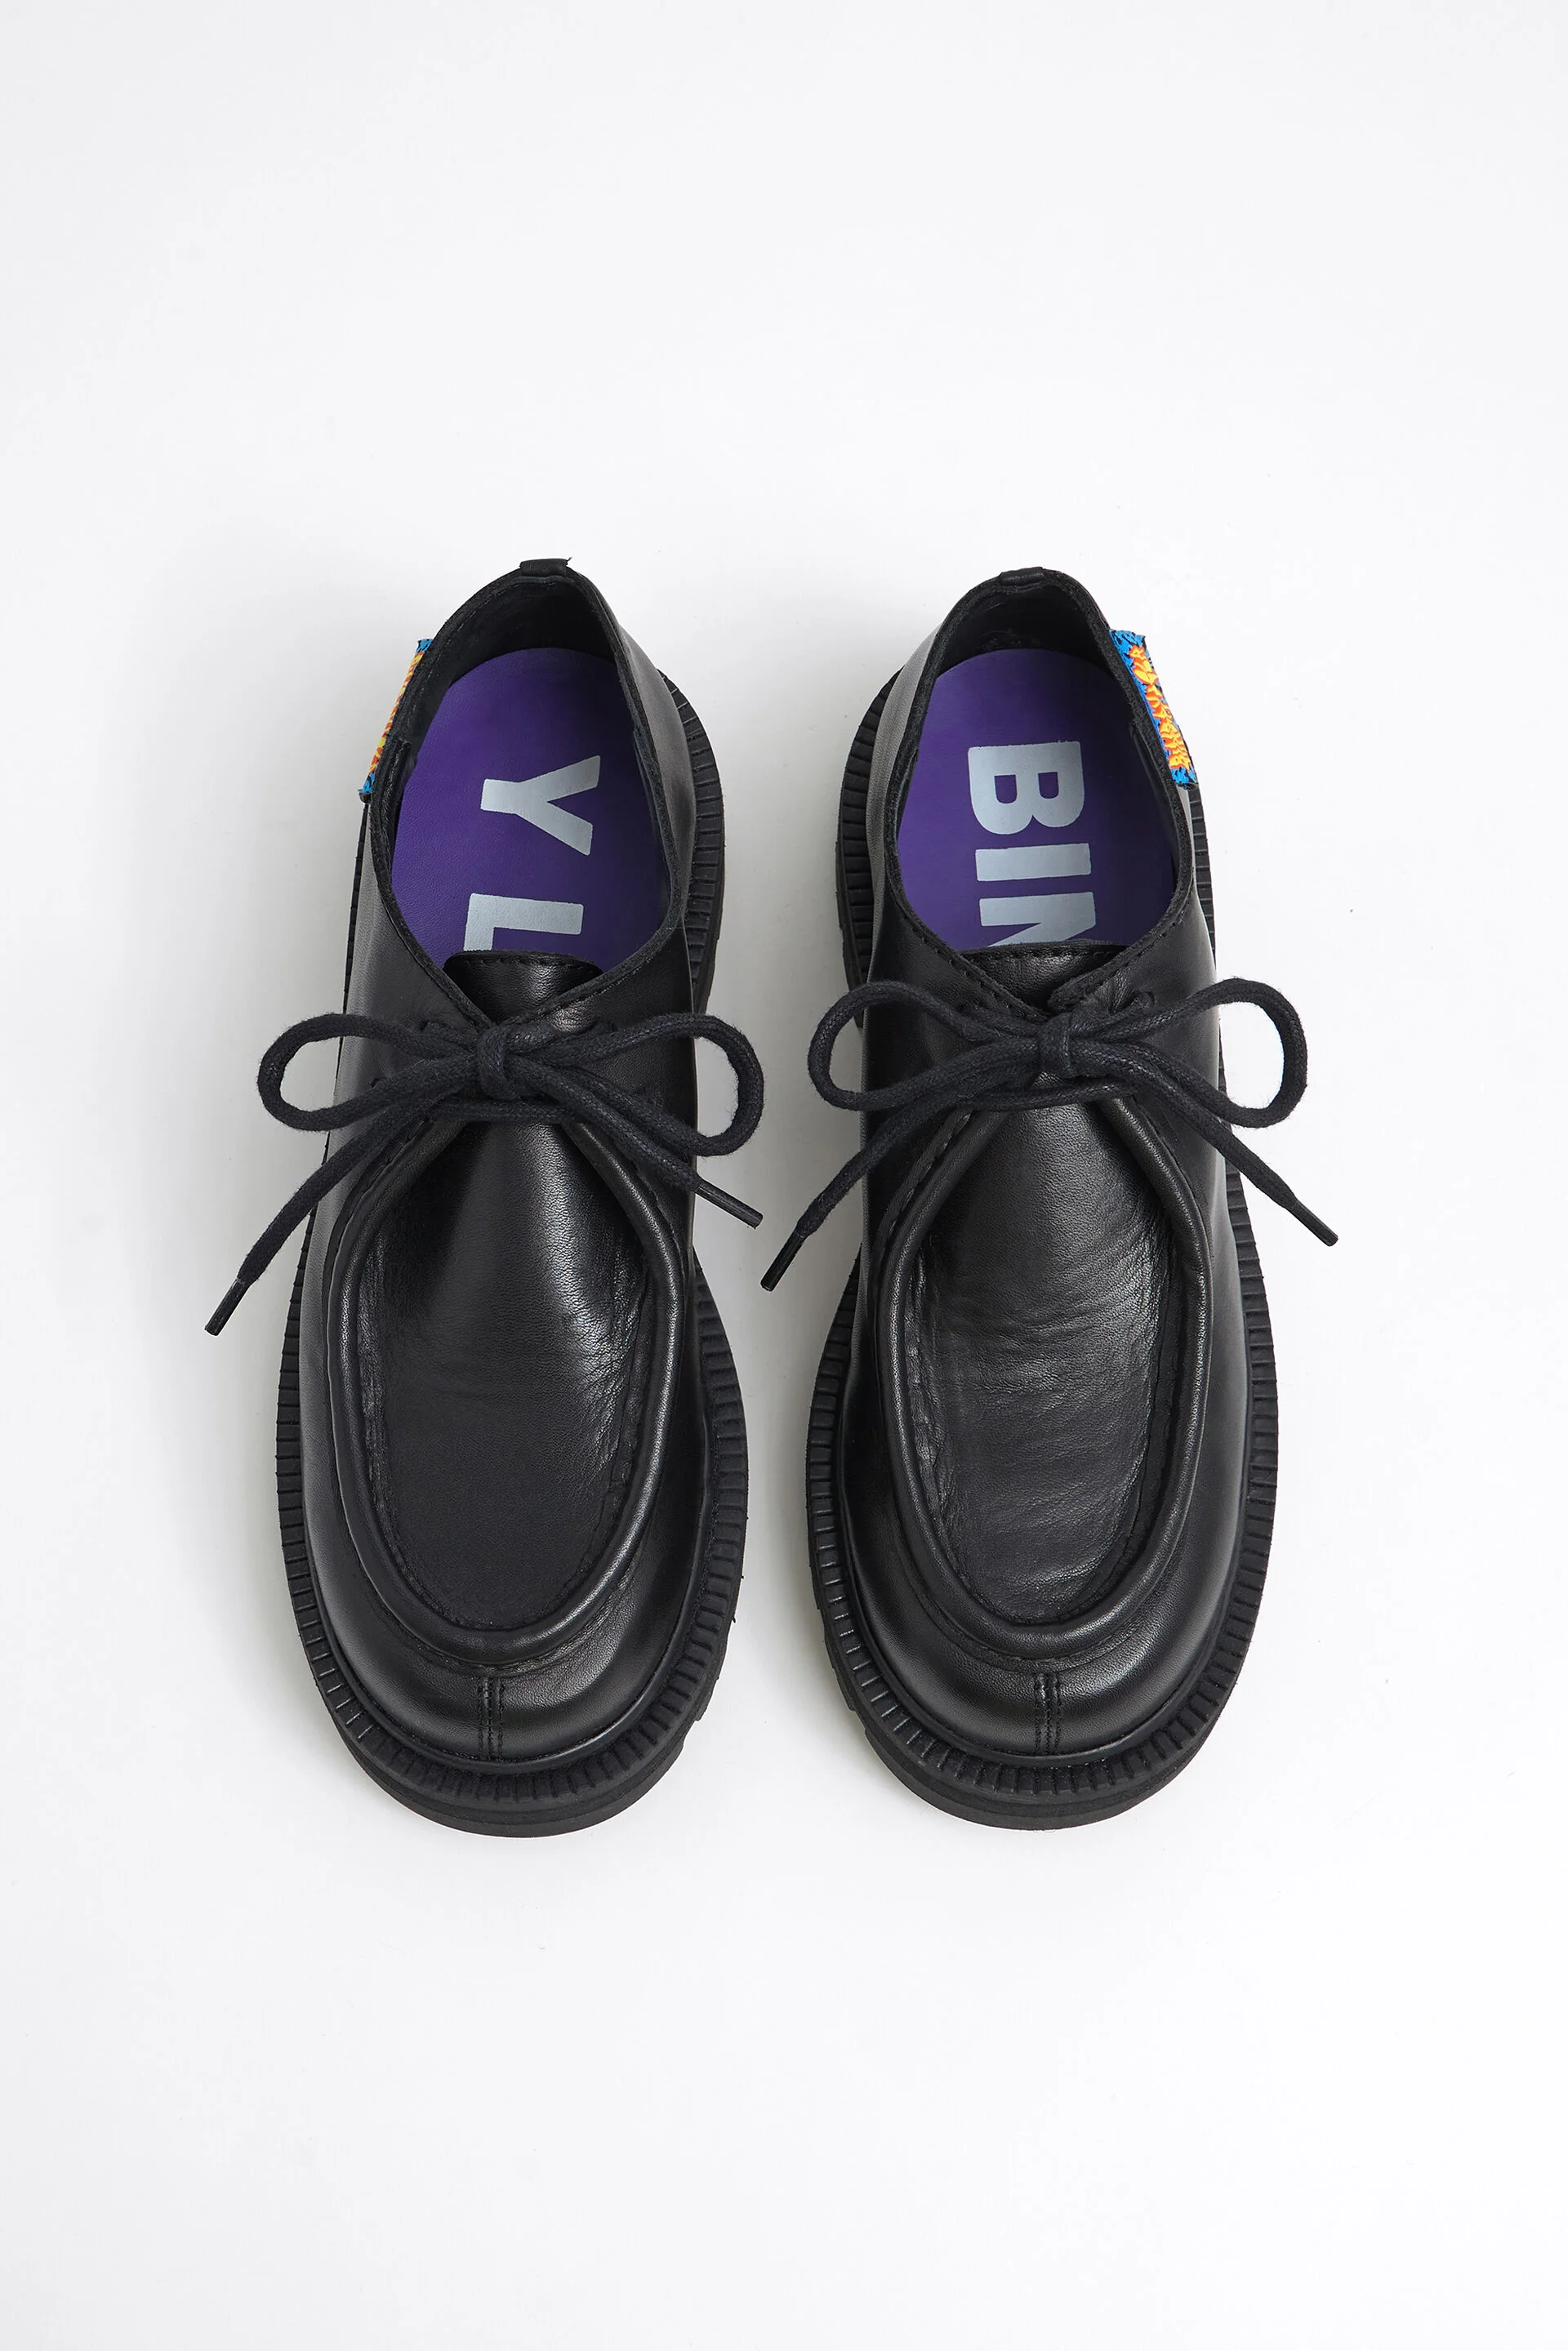 Leather trainers Bimba y Lola Purple size 41 EU in Leather - 30274537